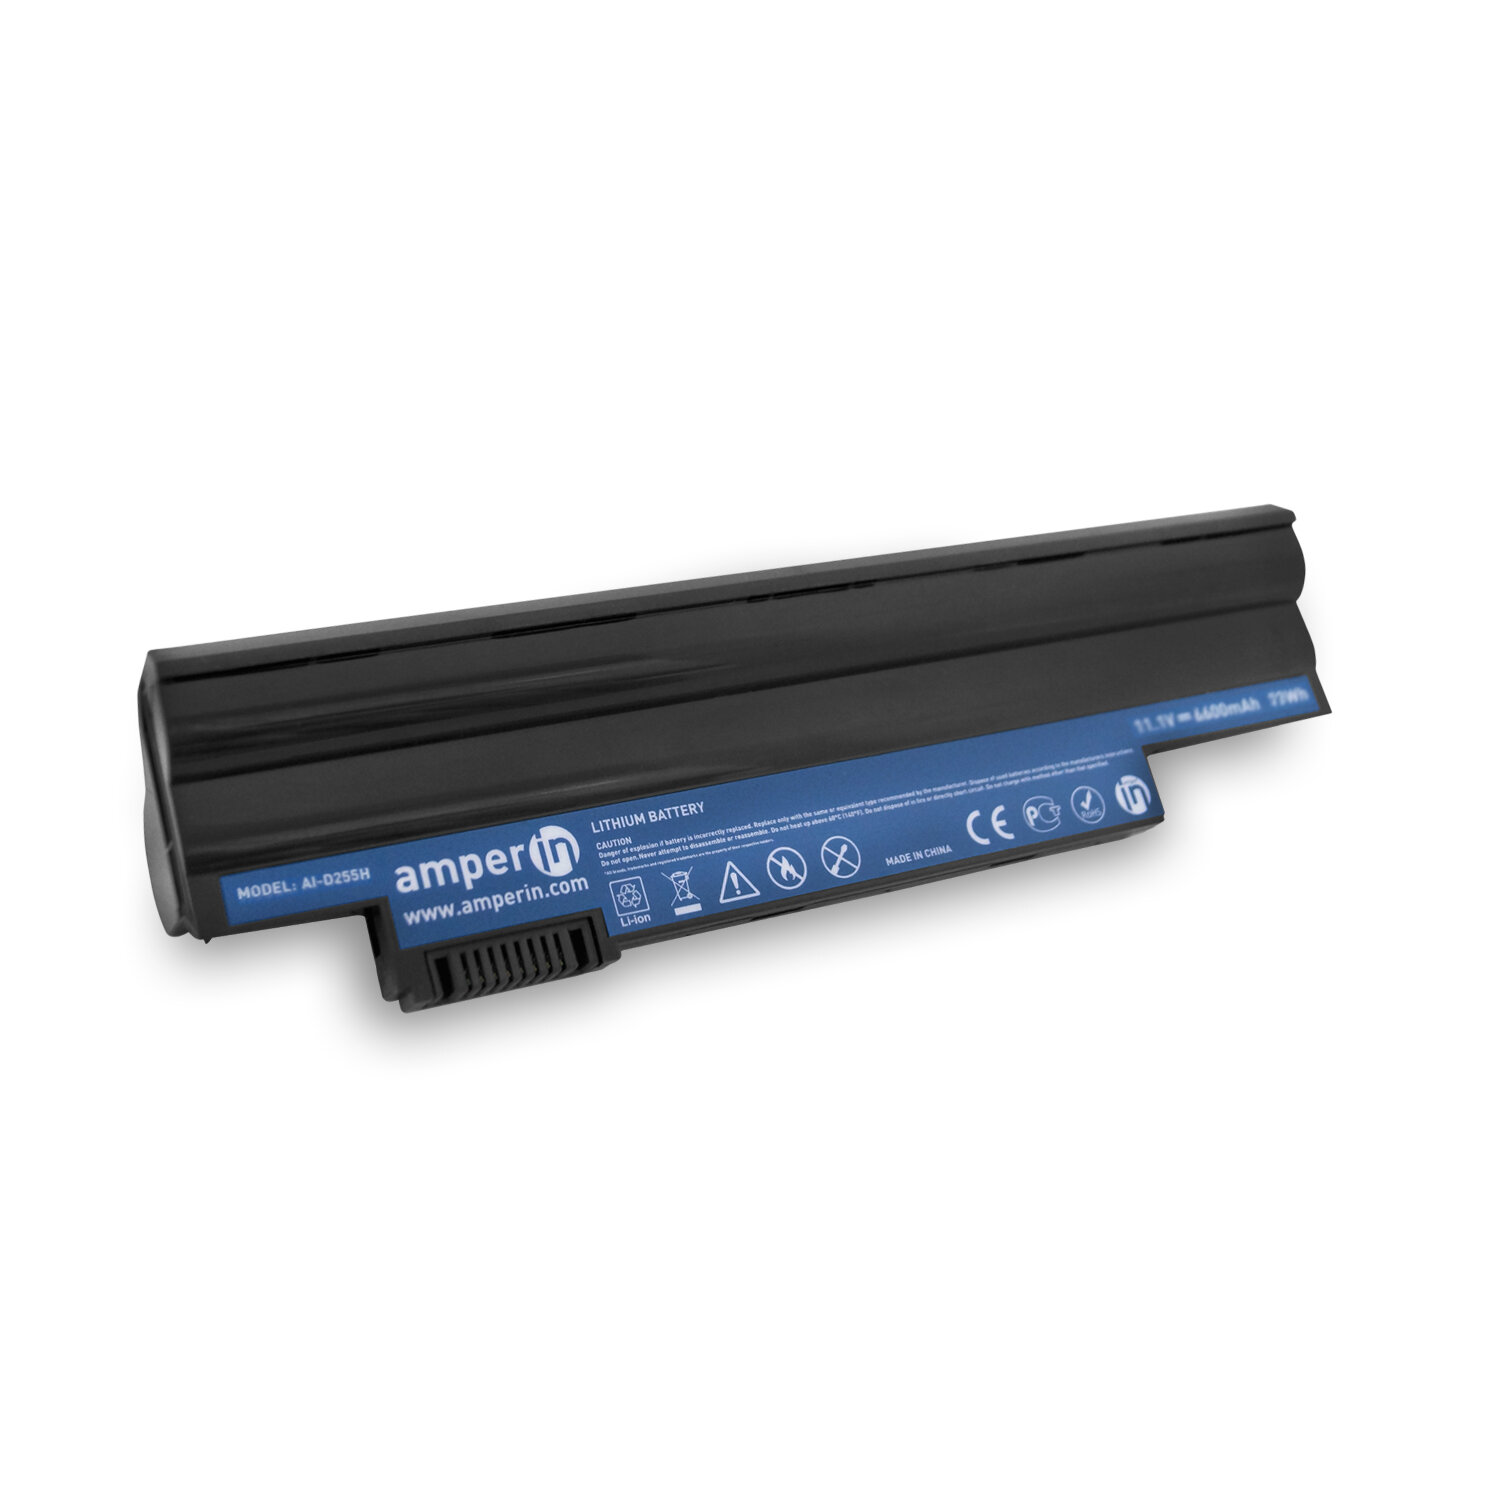 Аккумулятор Amperin для ноутбука Acer Aspire One D255 11.1V 6600mAh (73Wh) AI-D255H